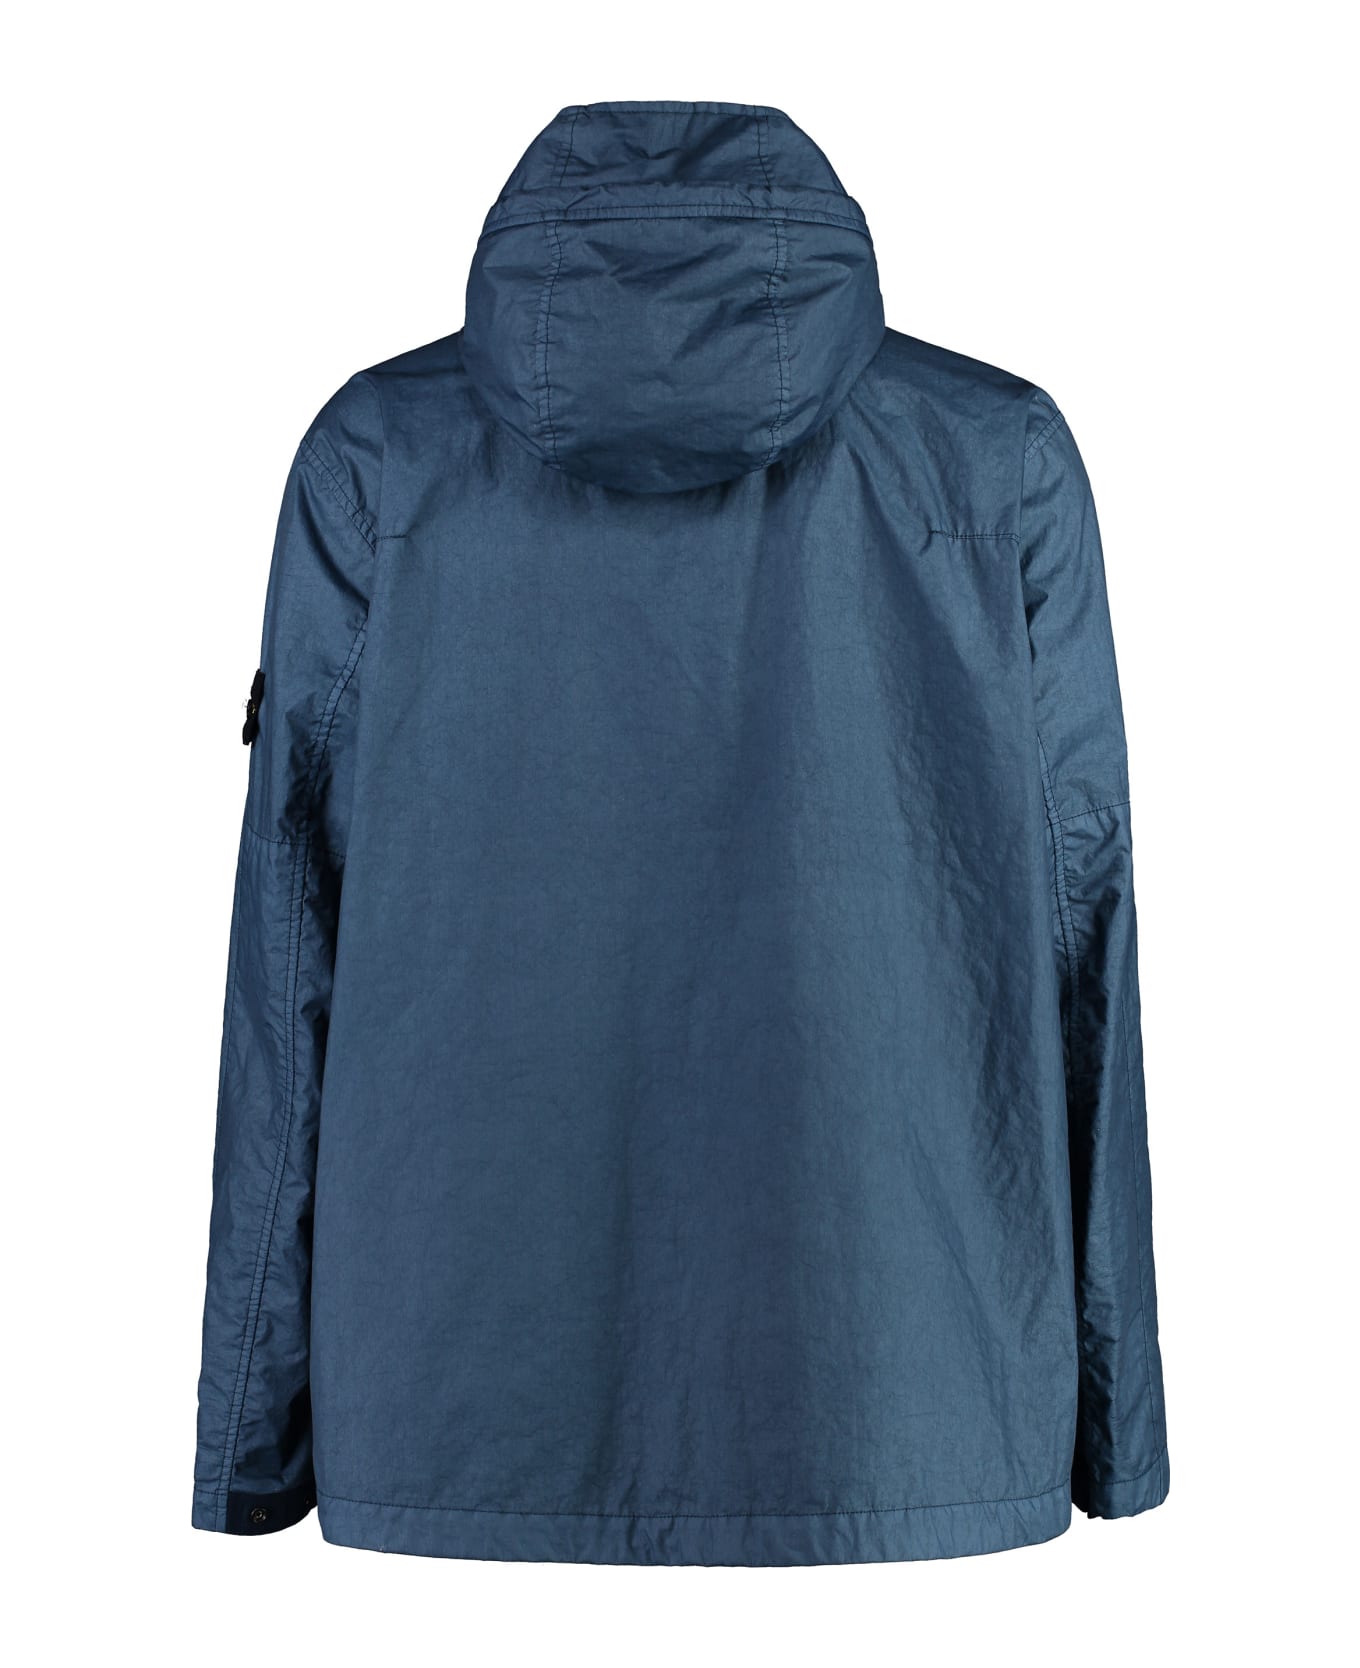 Stone Island Technical Fabric Hooded Jacket - blue